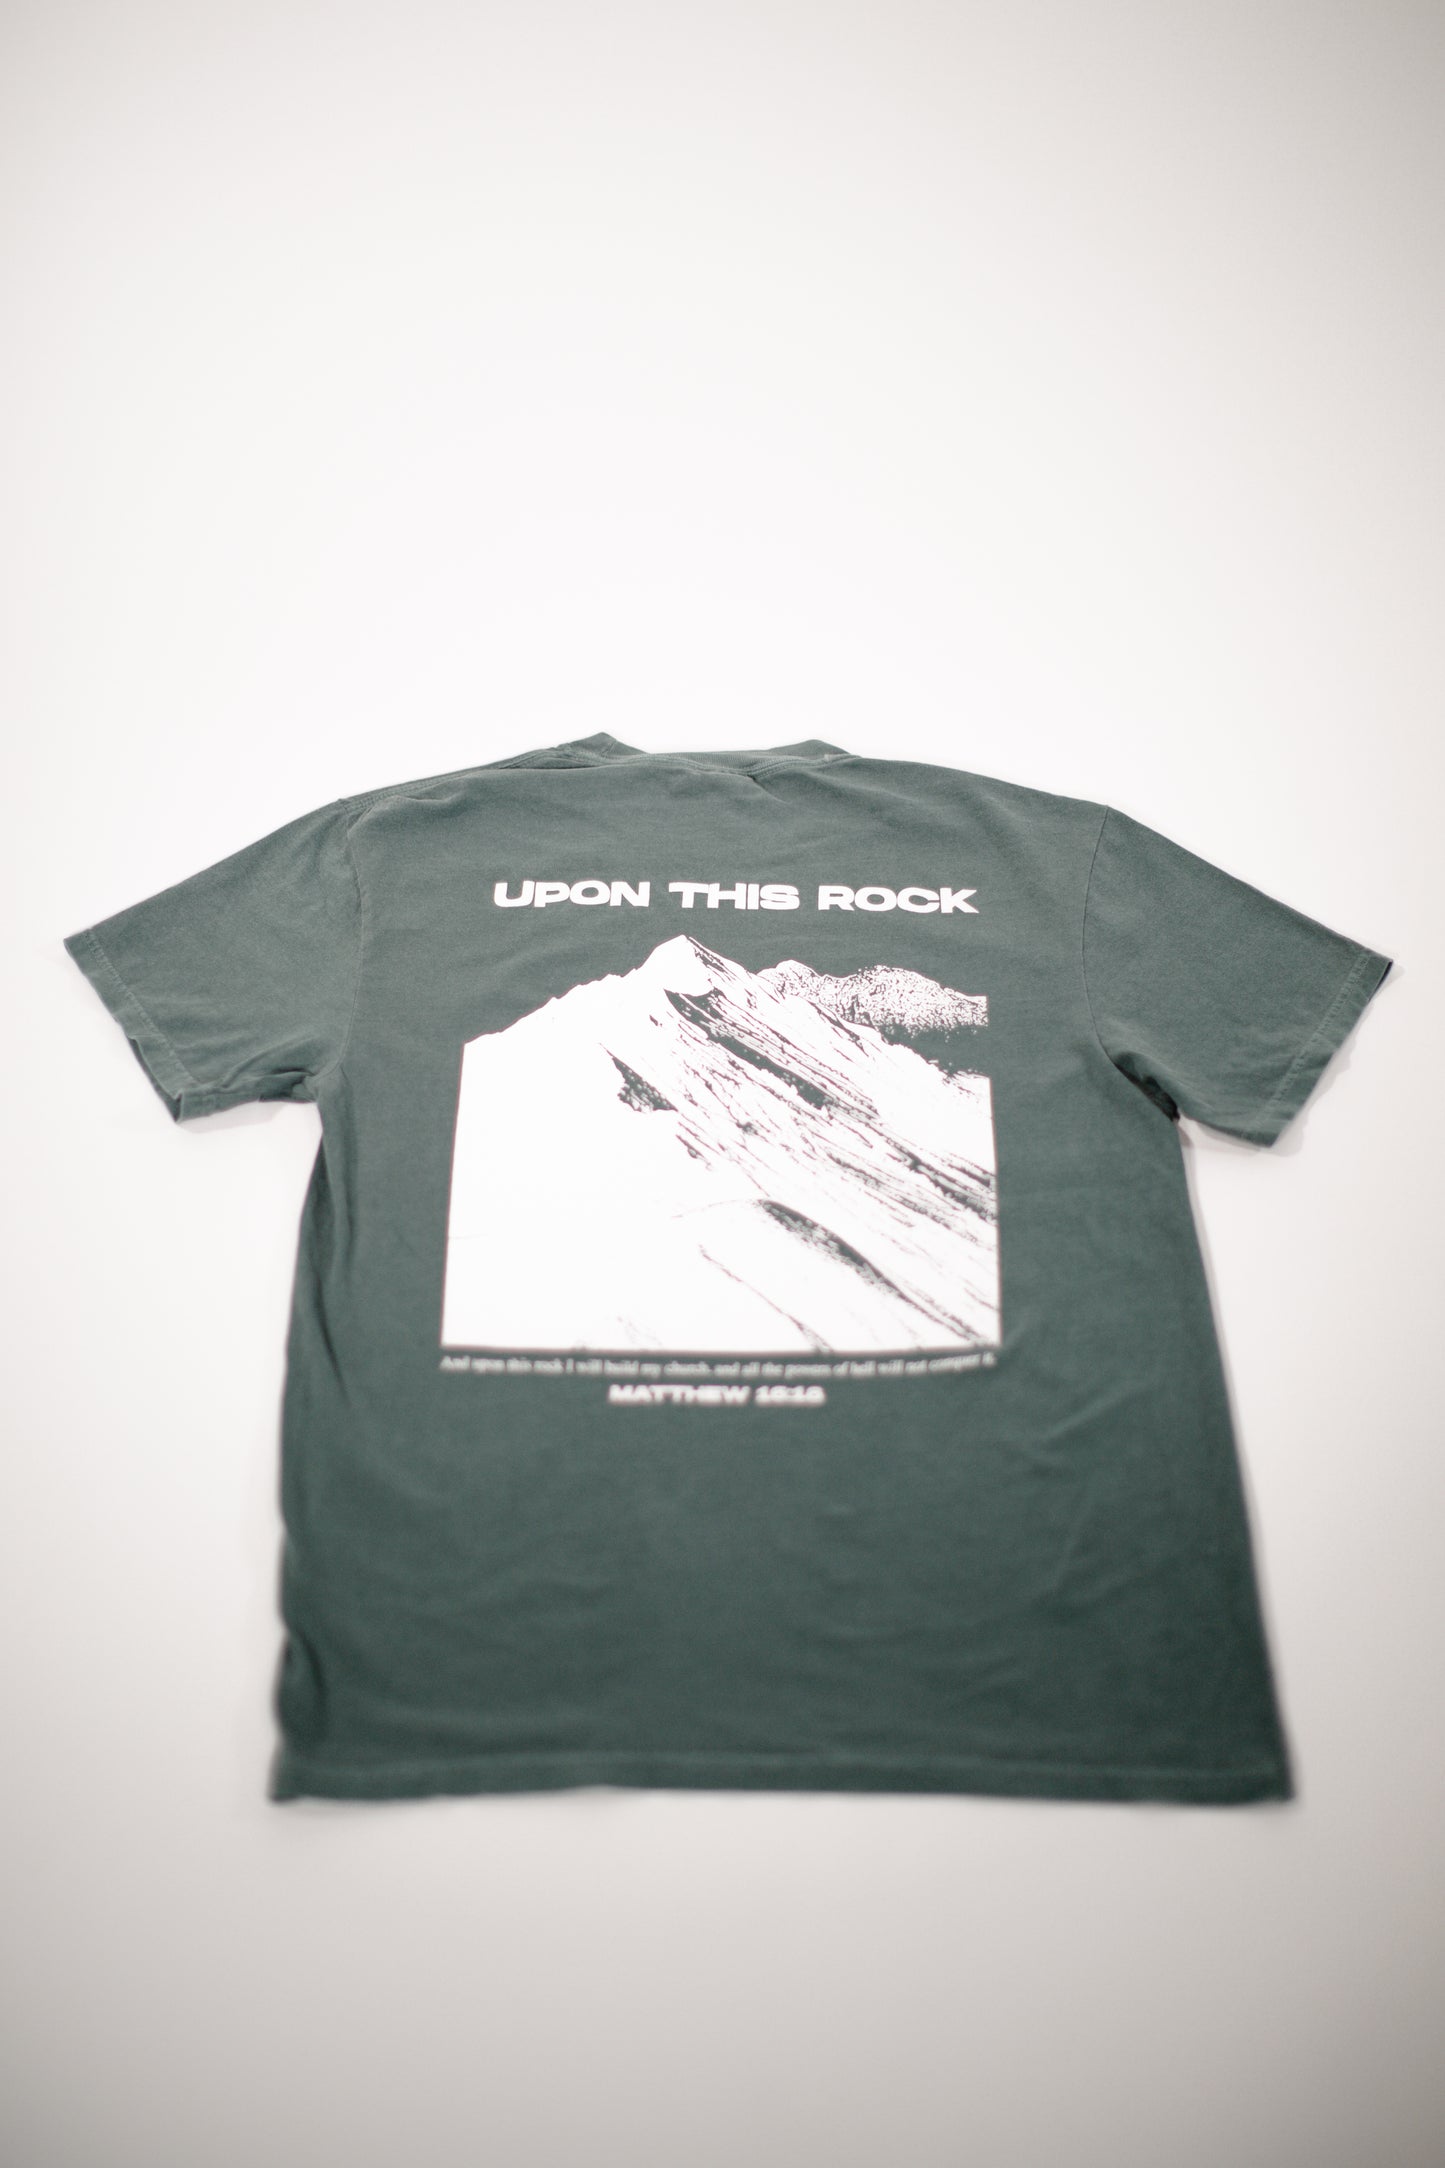 Upon This Rock T-Shirt